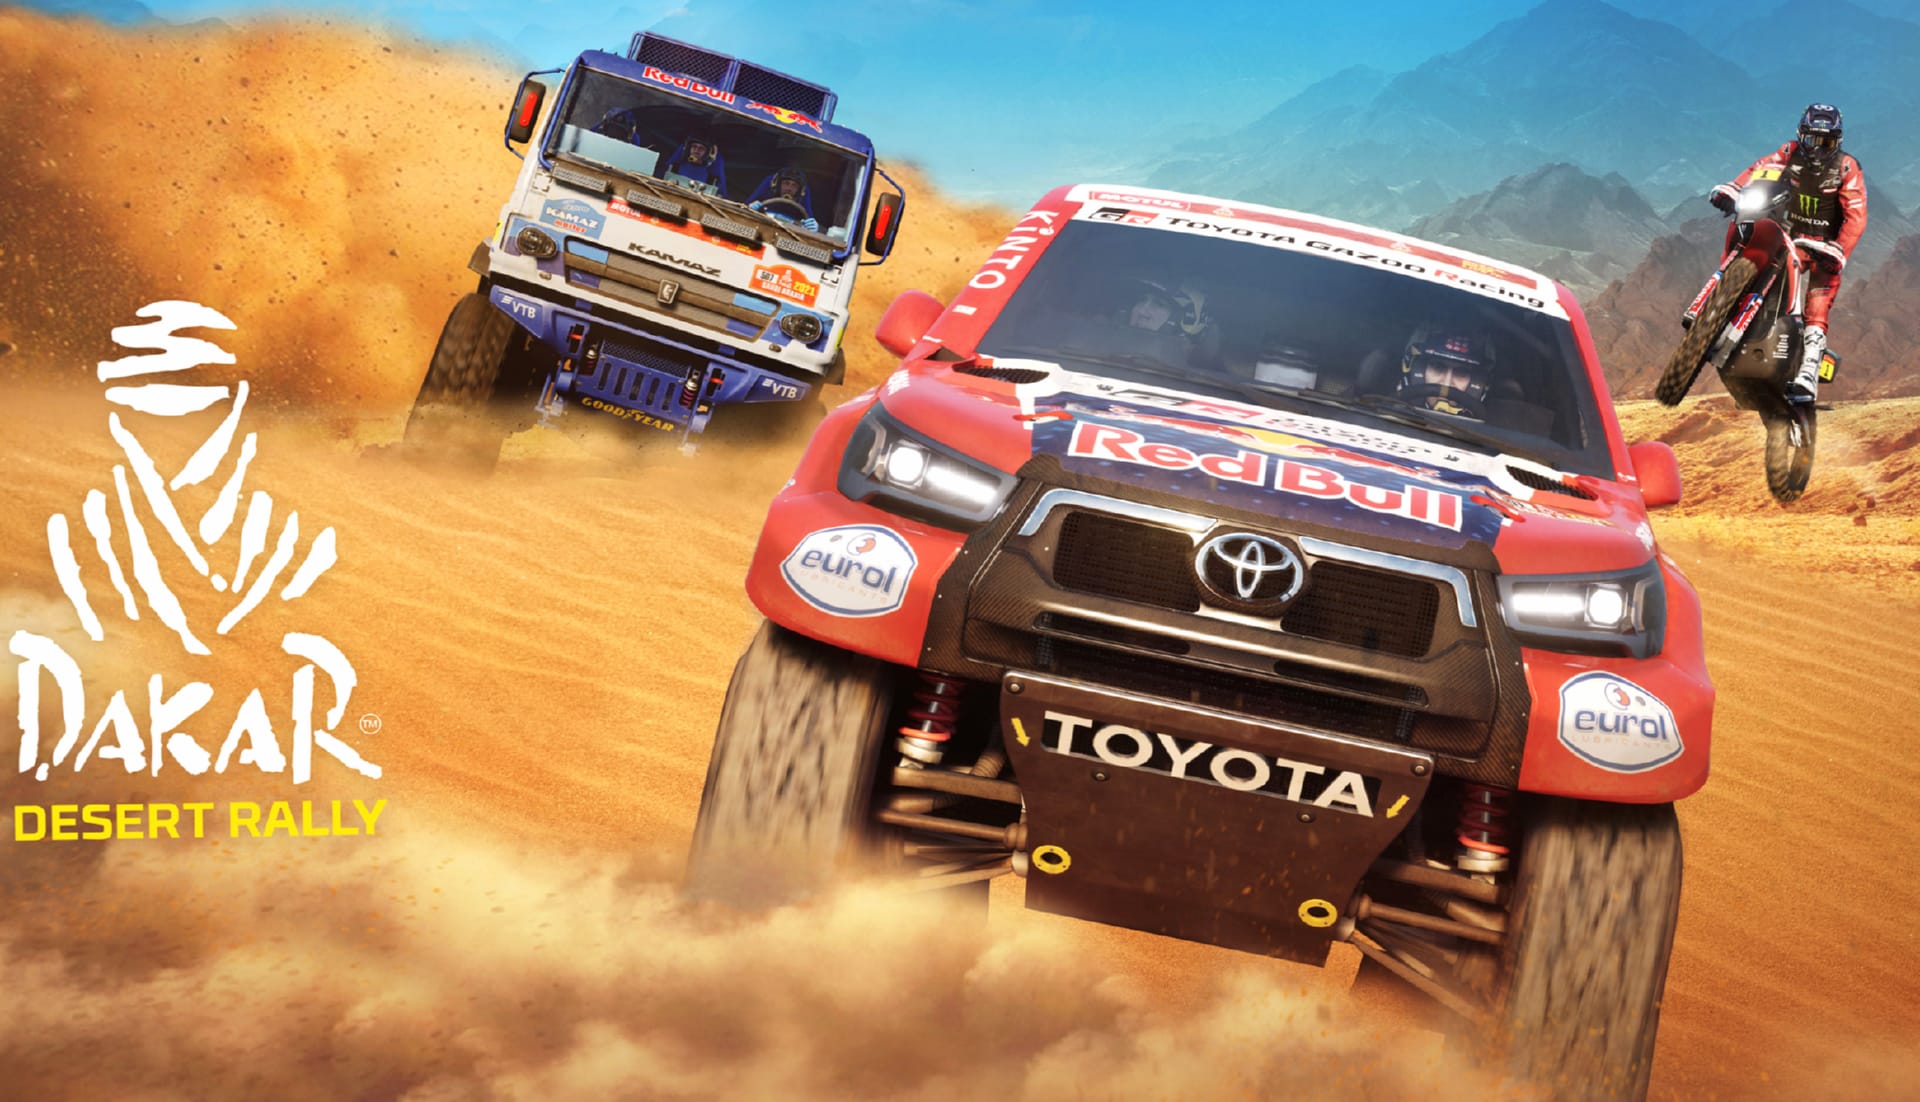 Dakar Desert Rally at 1280 x 960 size wallpapers HD quality